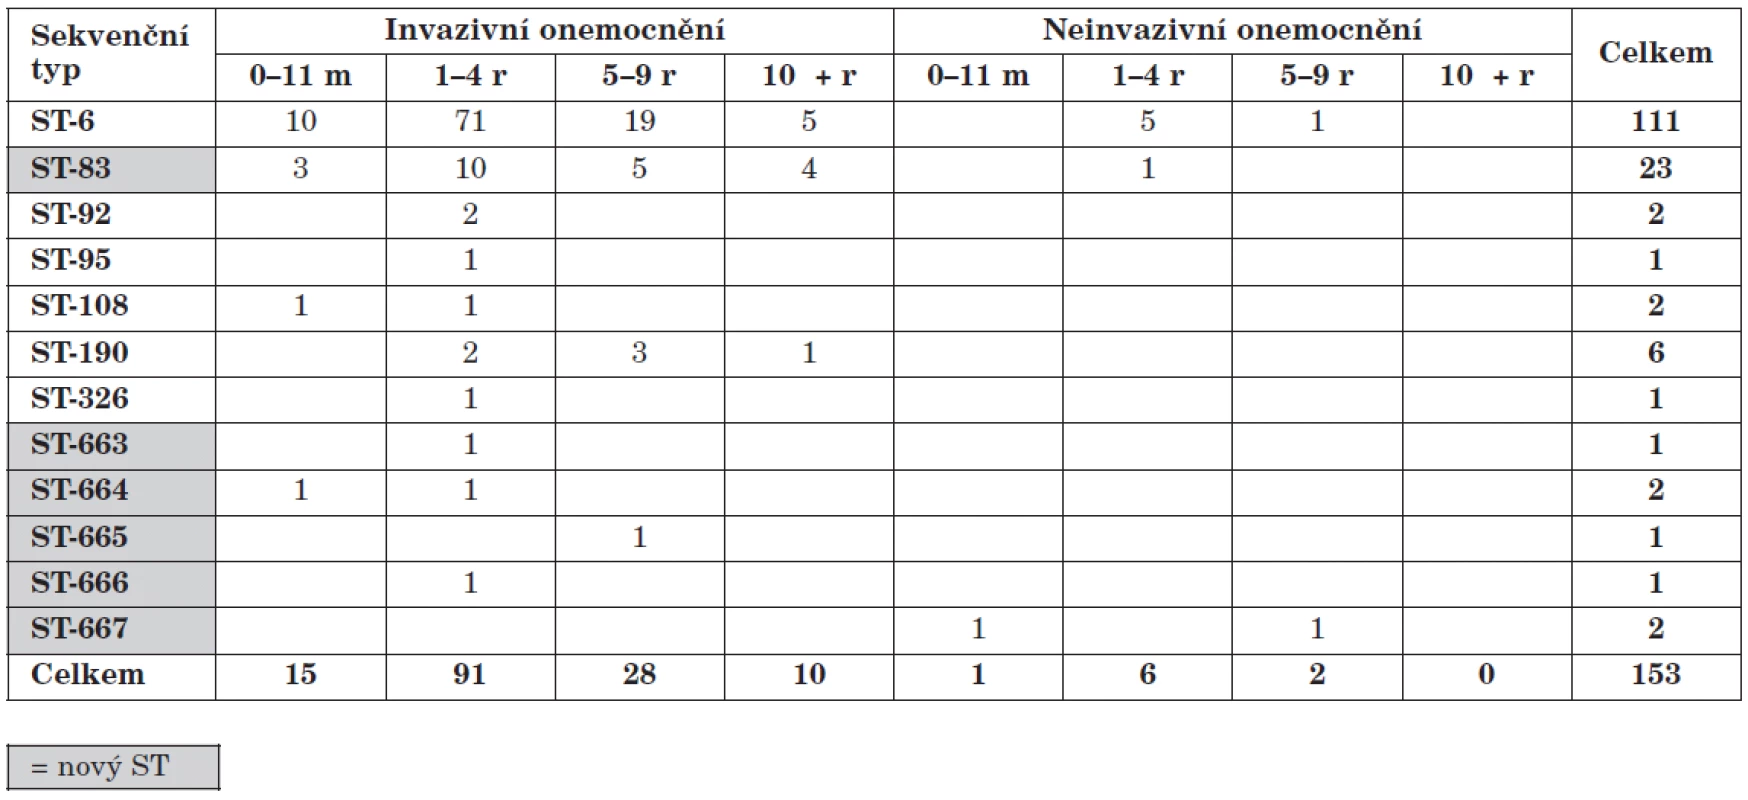 Sekvenční typy izolátů H. influenzae b, Česká republika, 2001-2009
Table 2. Sequence types of H. influenzae b isolates, Czech Republic, 2001–2009